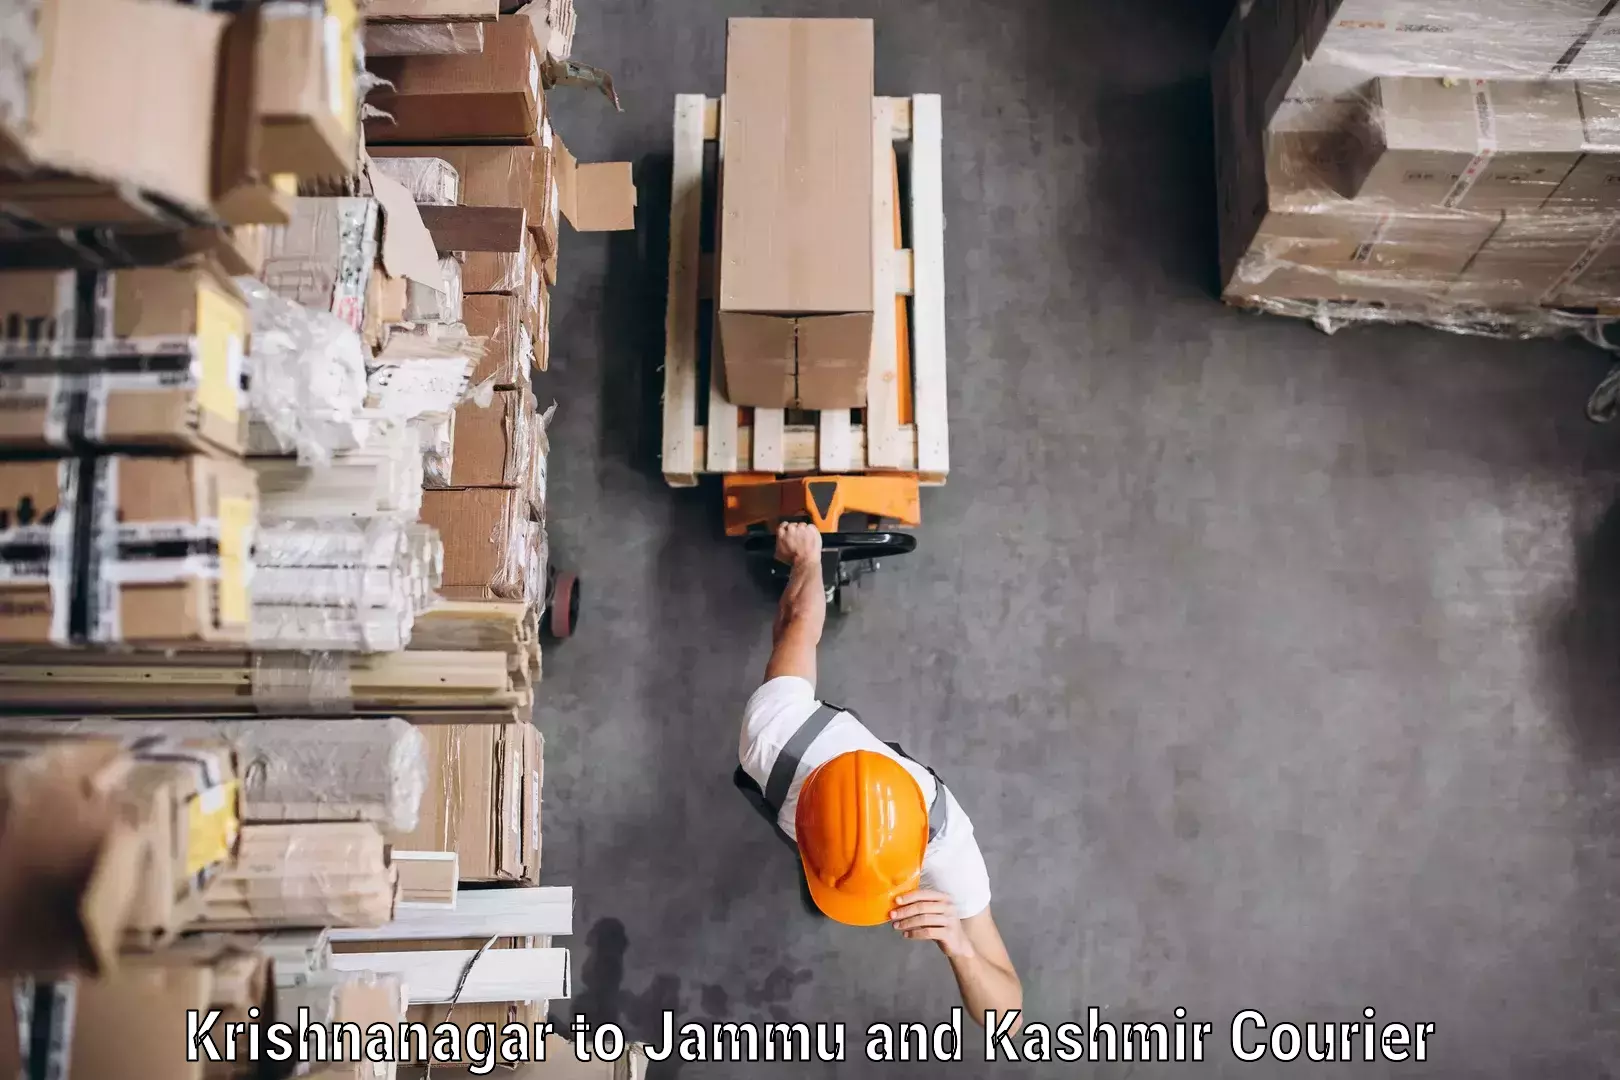 State-of-the-art courier technology Krishnanagar to Jammu and Kashmir